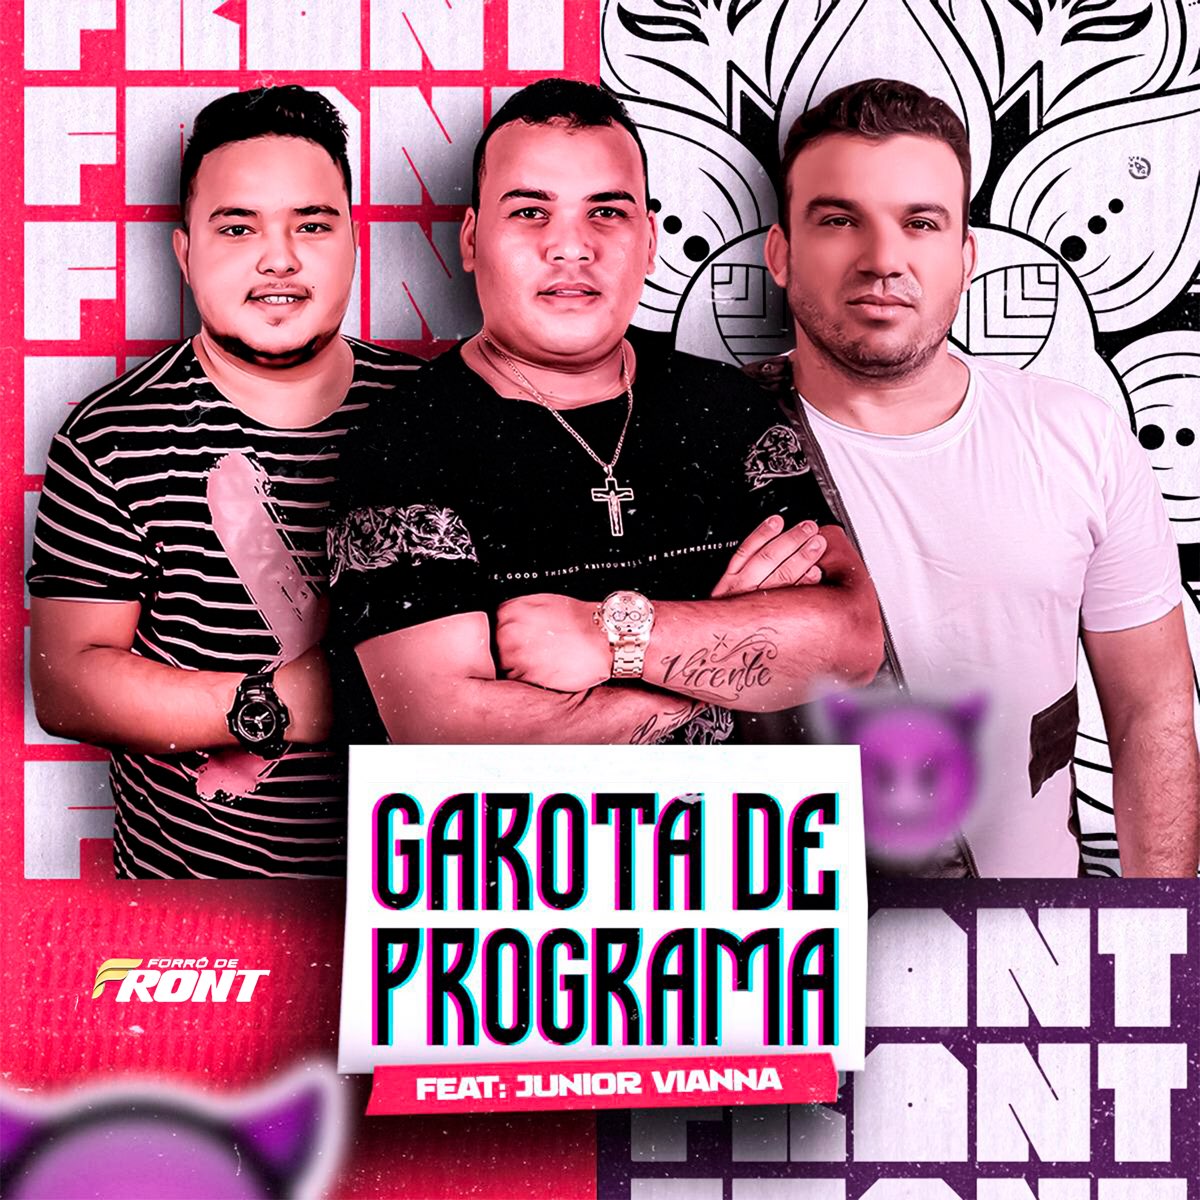 Garota de Programa (feat. Junior Vianna) - Single - Album by Forro de Front  - Apple Music